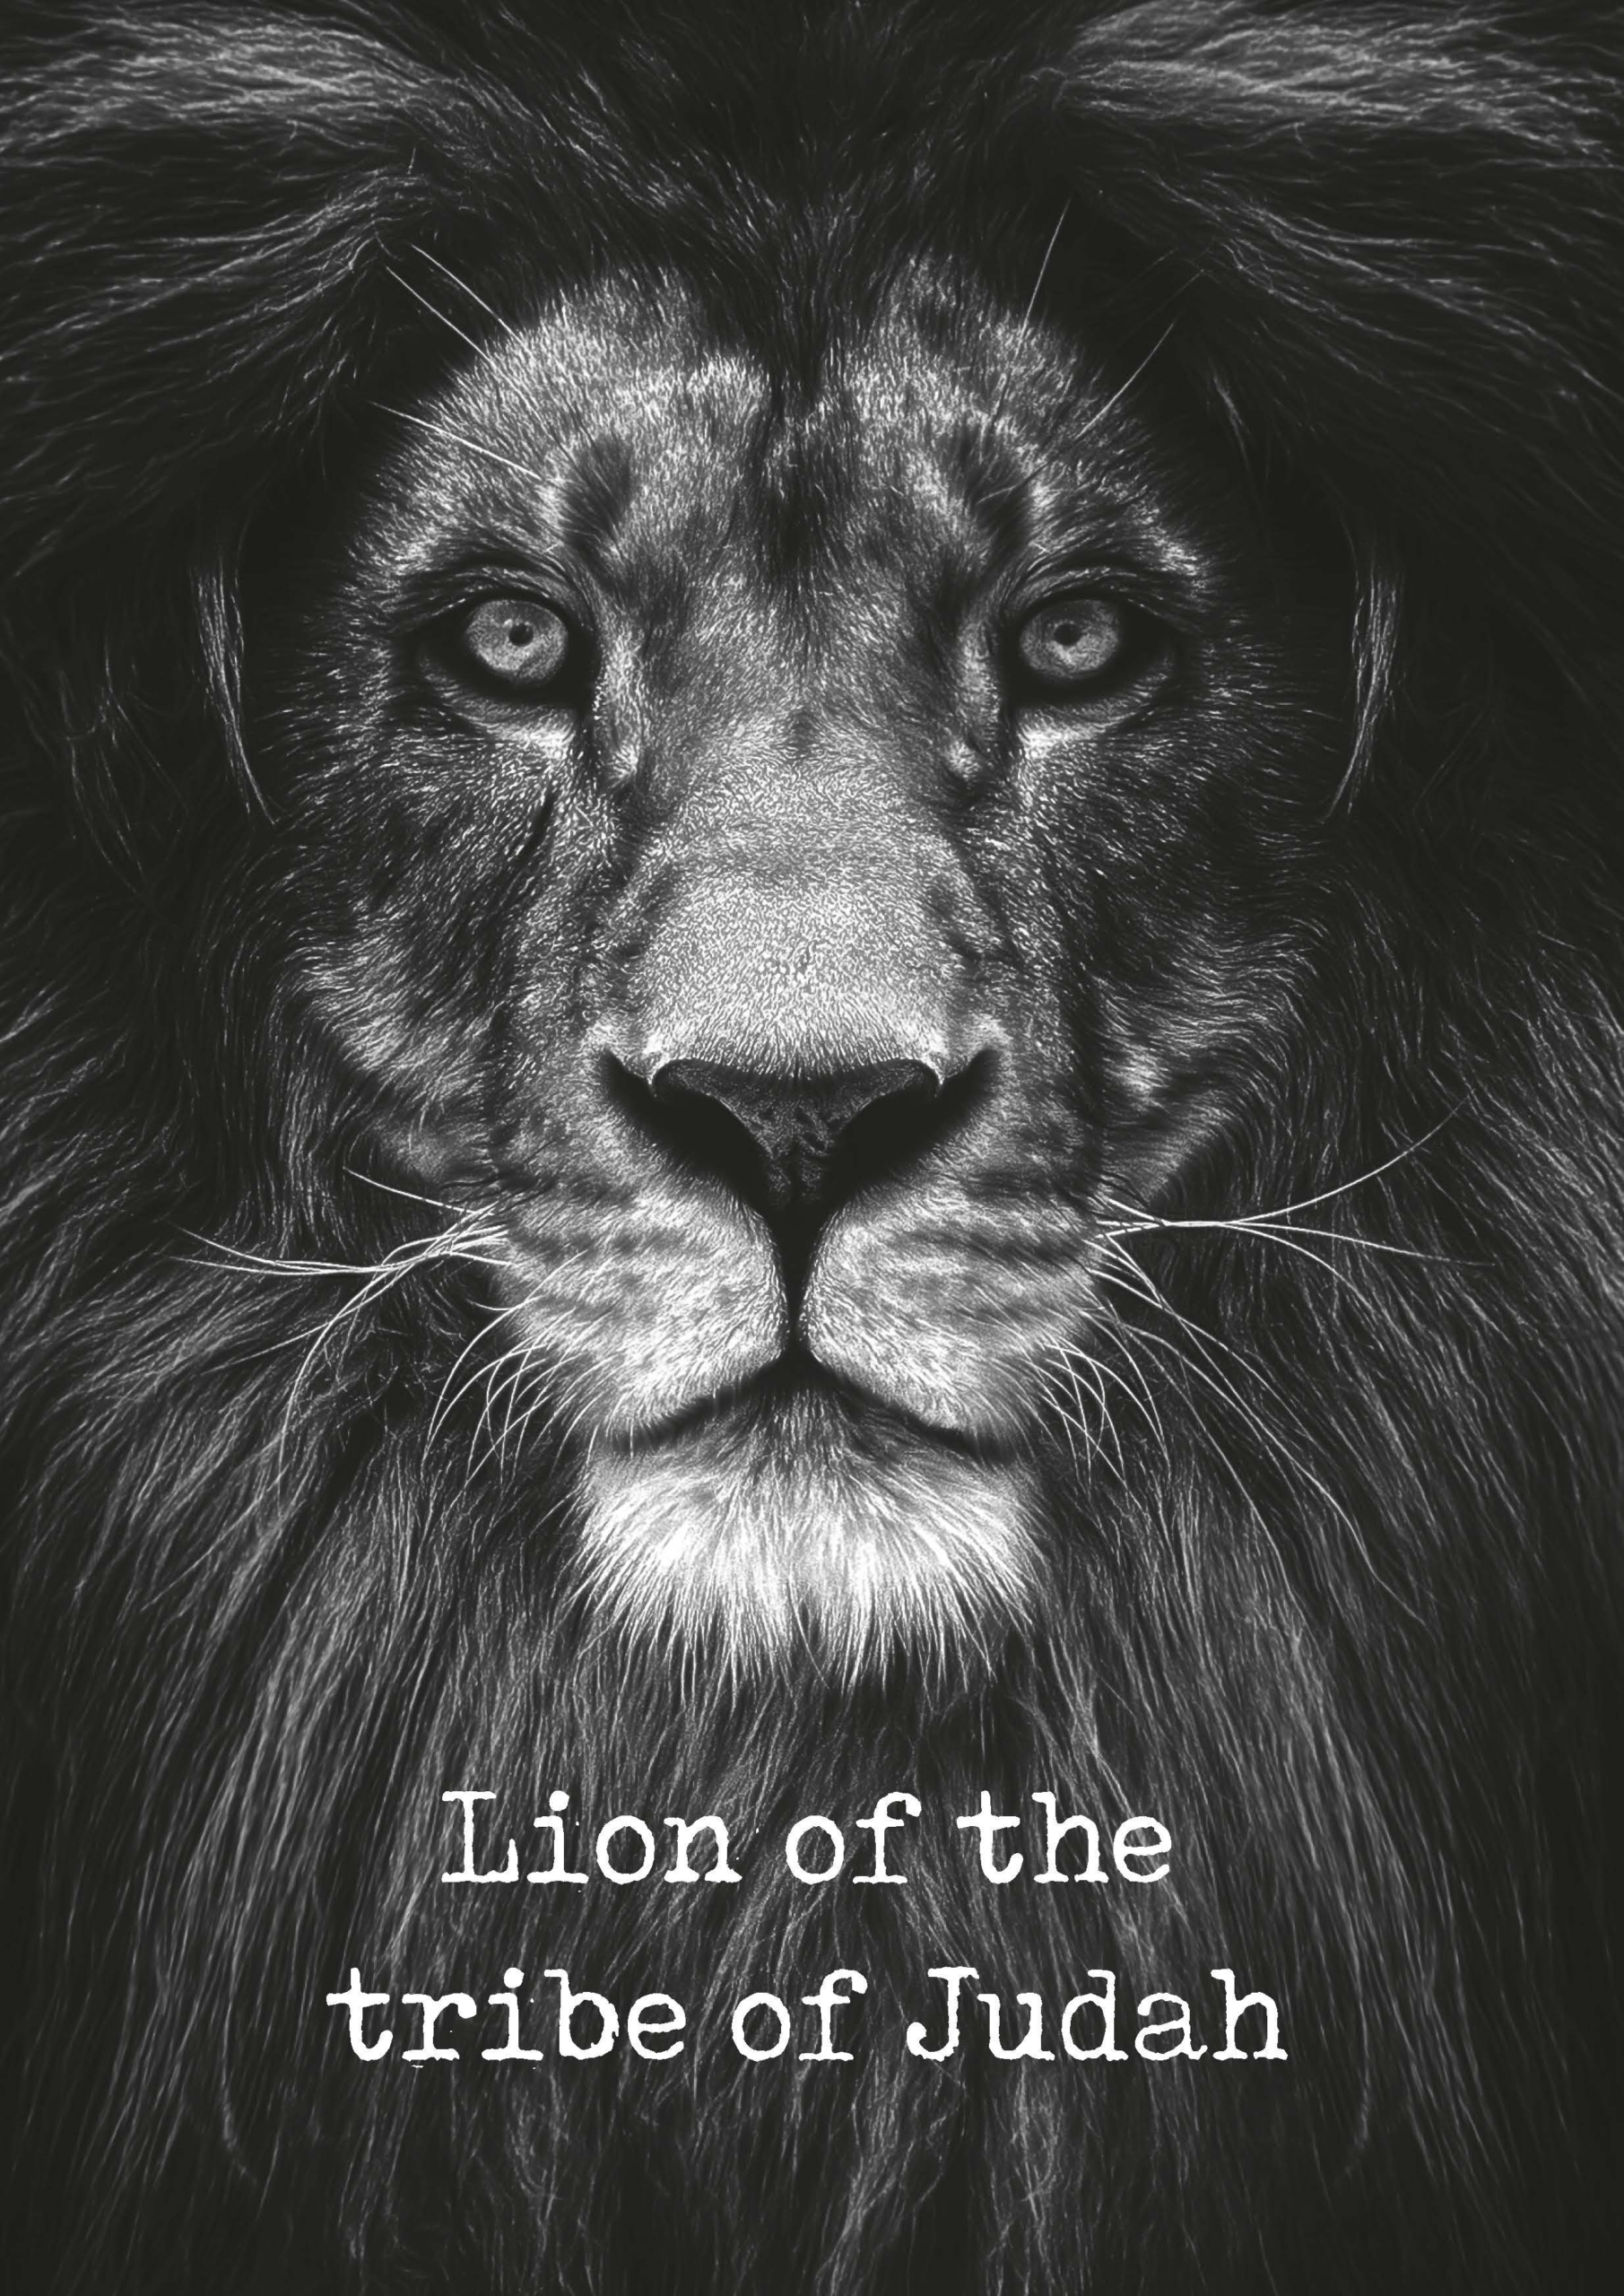 Tweede kans: Metal Deco A3 'Lion of the tribe of Judah' - MA11623-S -  Sale bij MajesticAlly